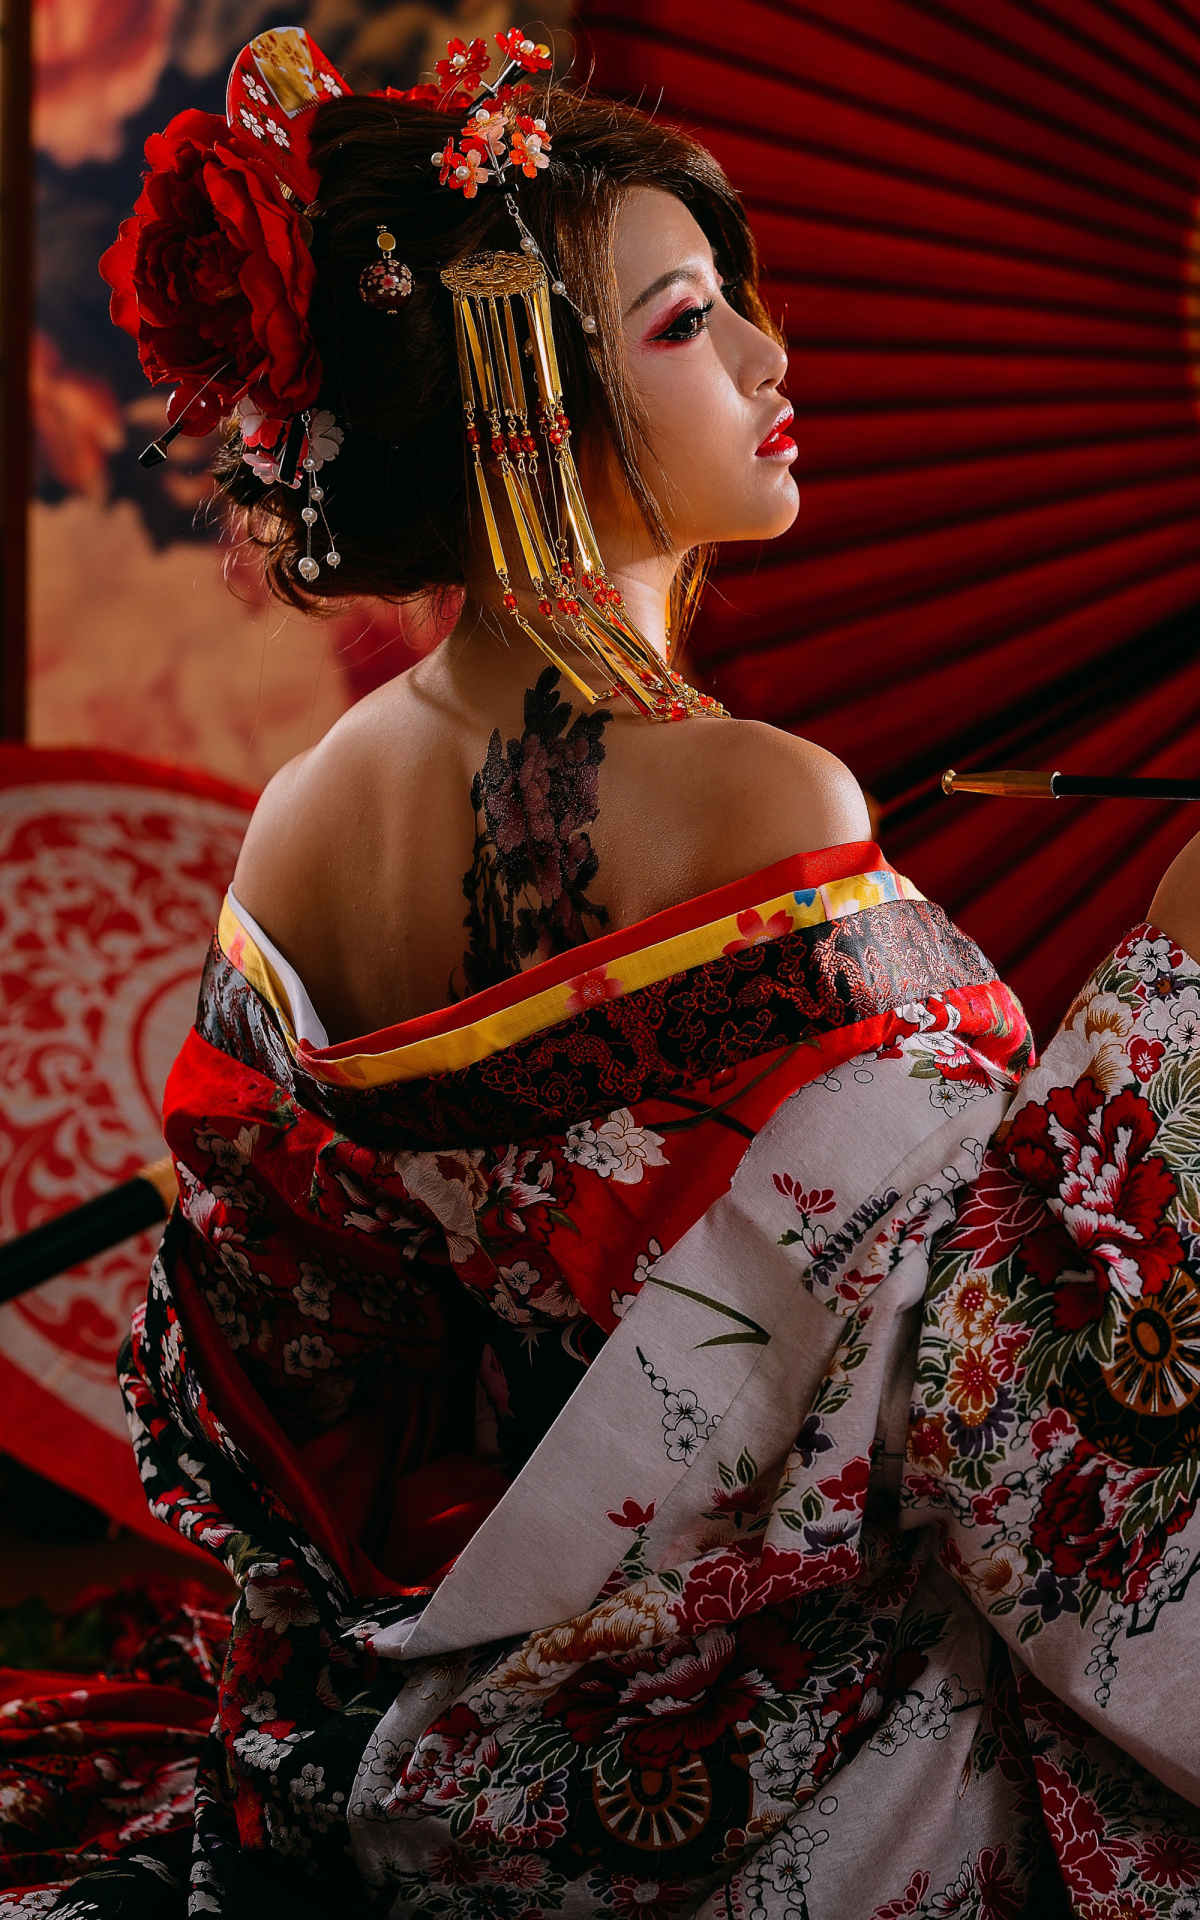 Geisha with Red Umbrella